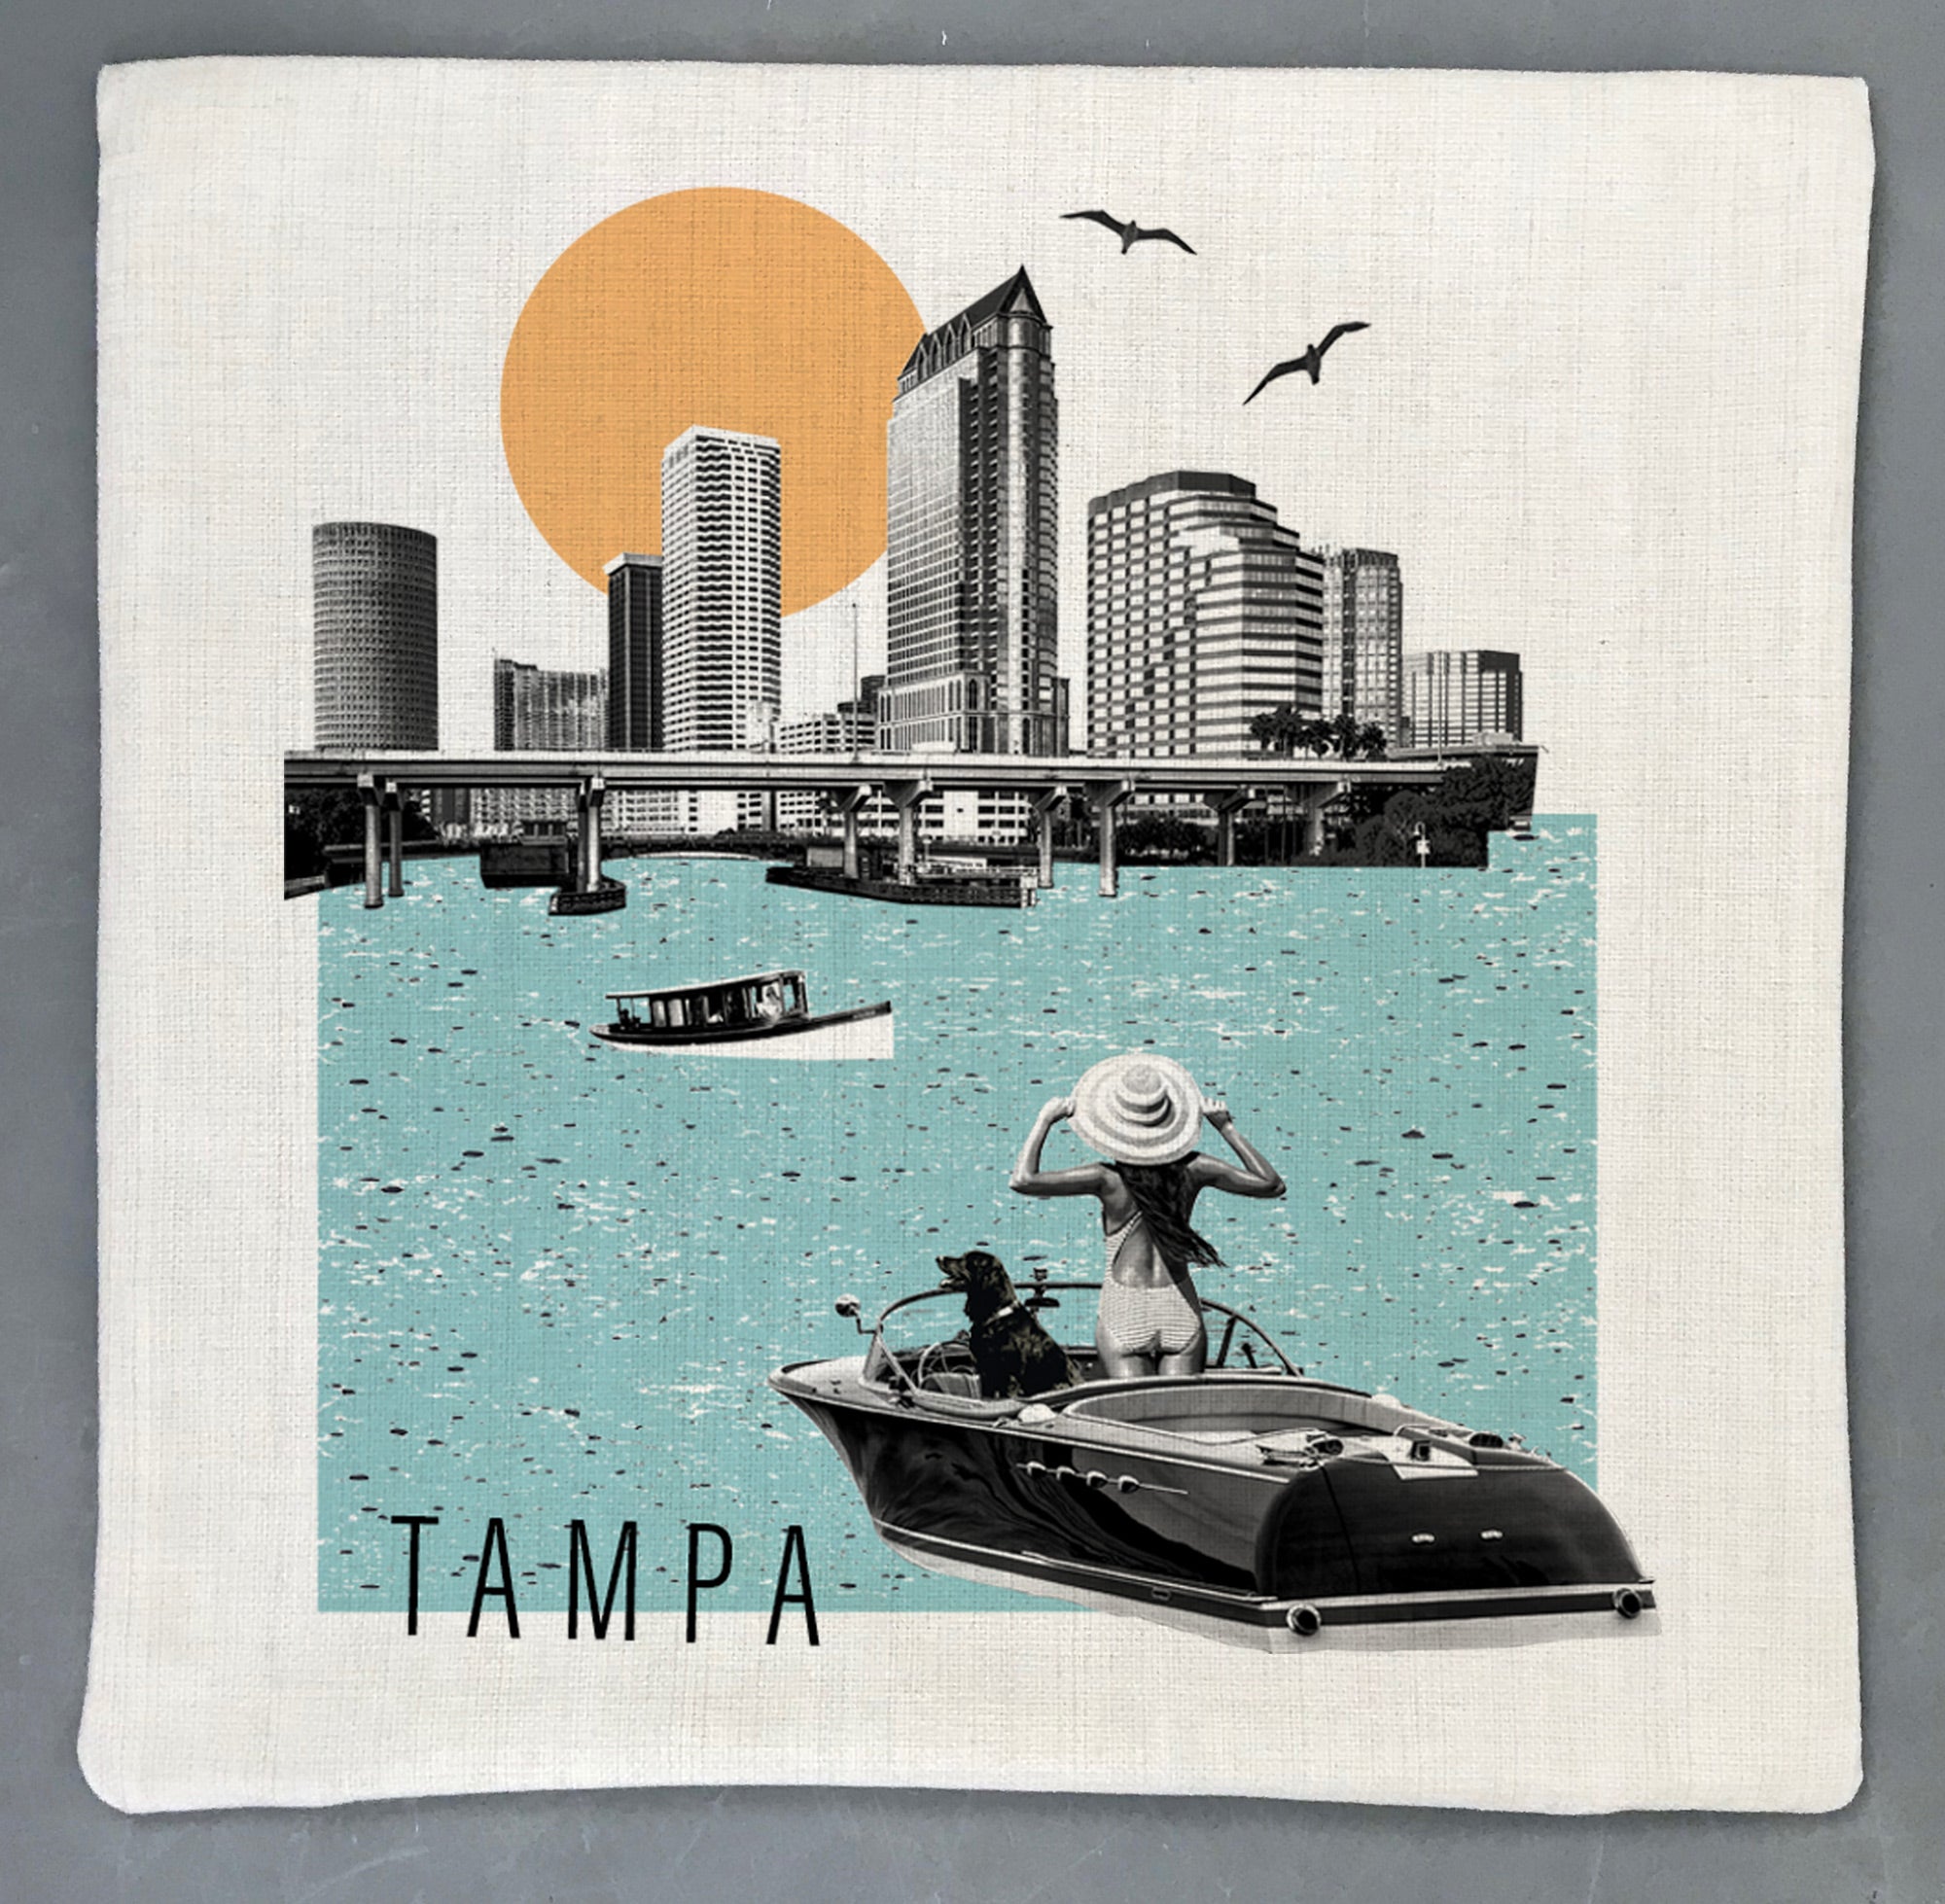 Tampa City Scene Pillow Cover | Florida Tampa Collage Photo Skyline Decorative Throw Pillow Cushion Sham